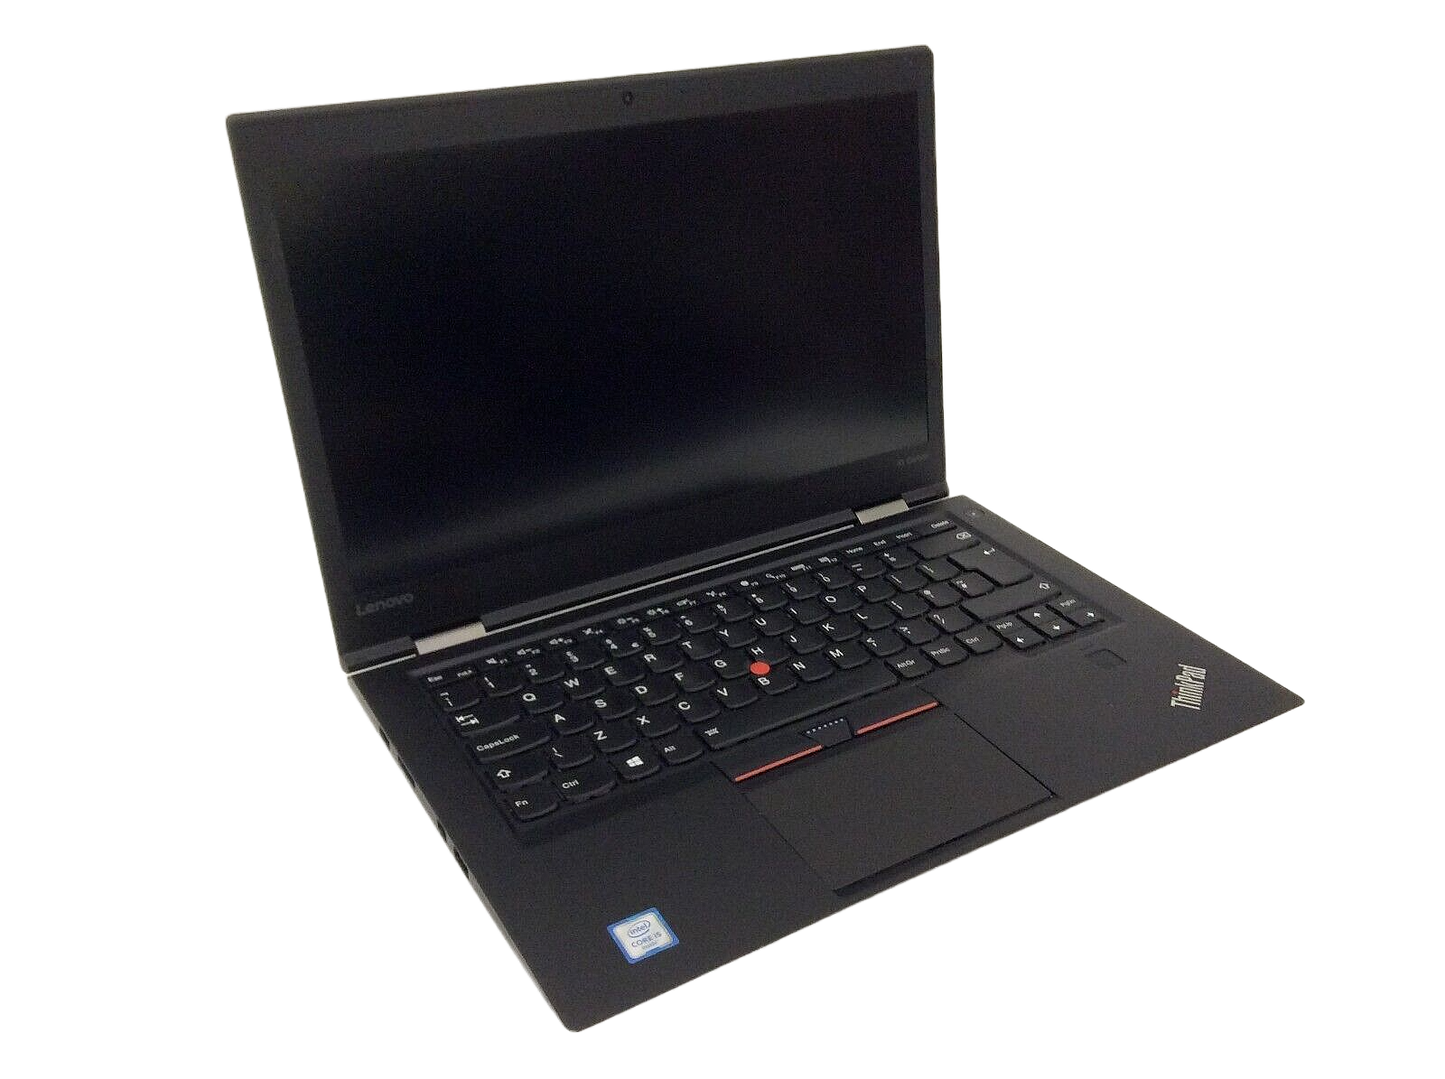 Lenovo Thinkpad X1 Carbon 4th GEN Core i5-6200U Turbo 2.80 GHz 8GB 240GB SSD 14"